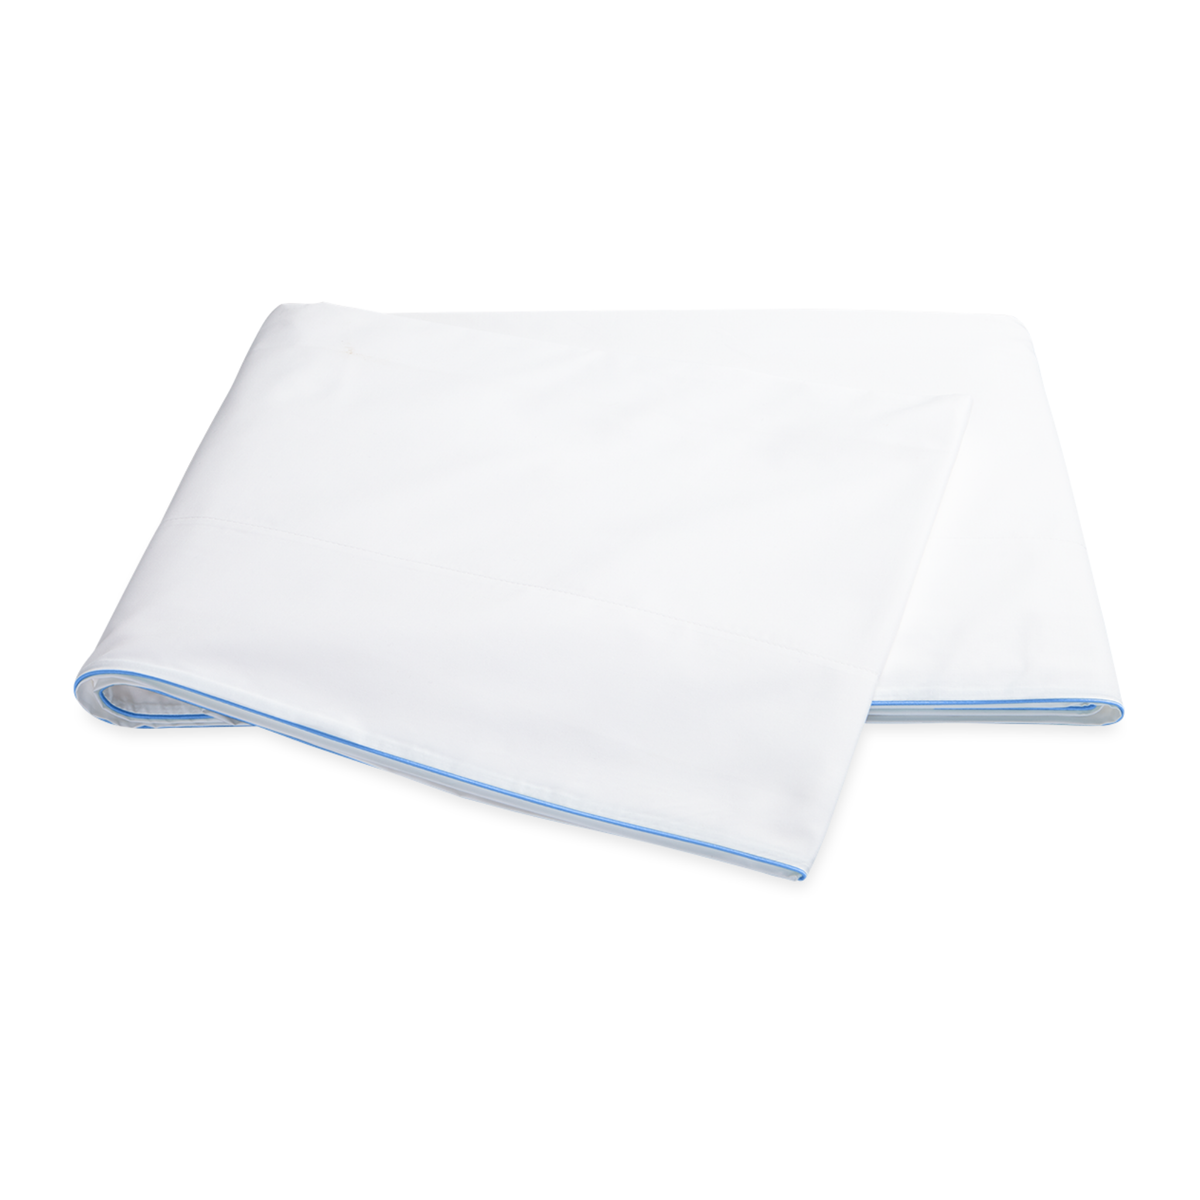 Folded Flat Sheet of Matouk Bryant Bedding in Azure Color